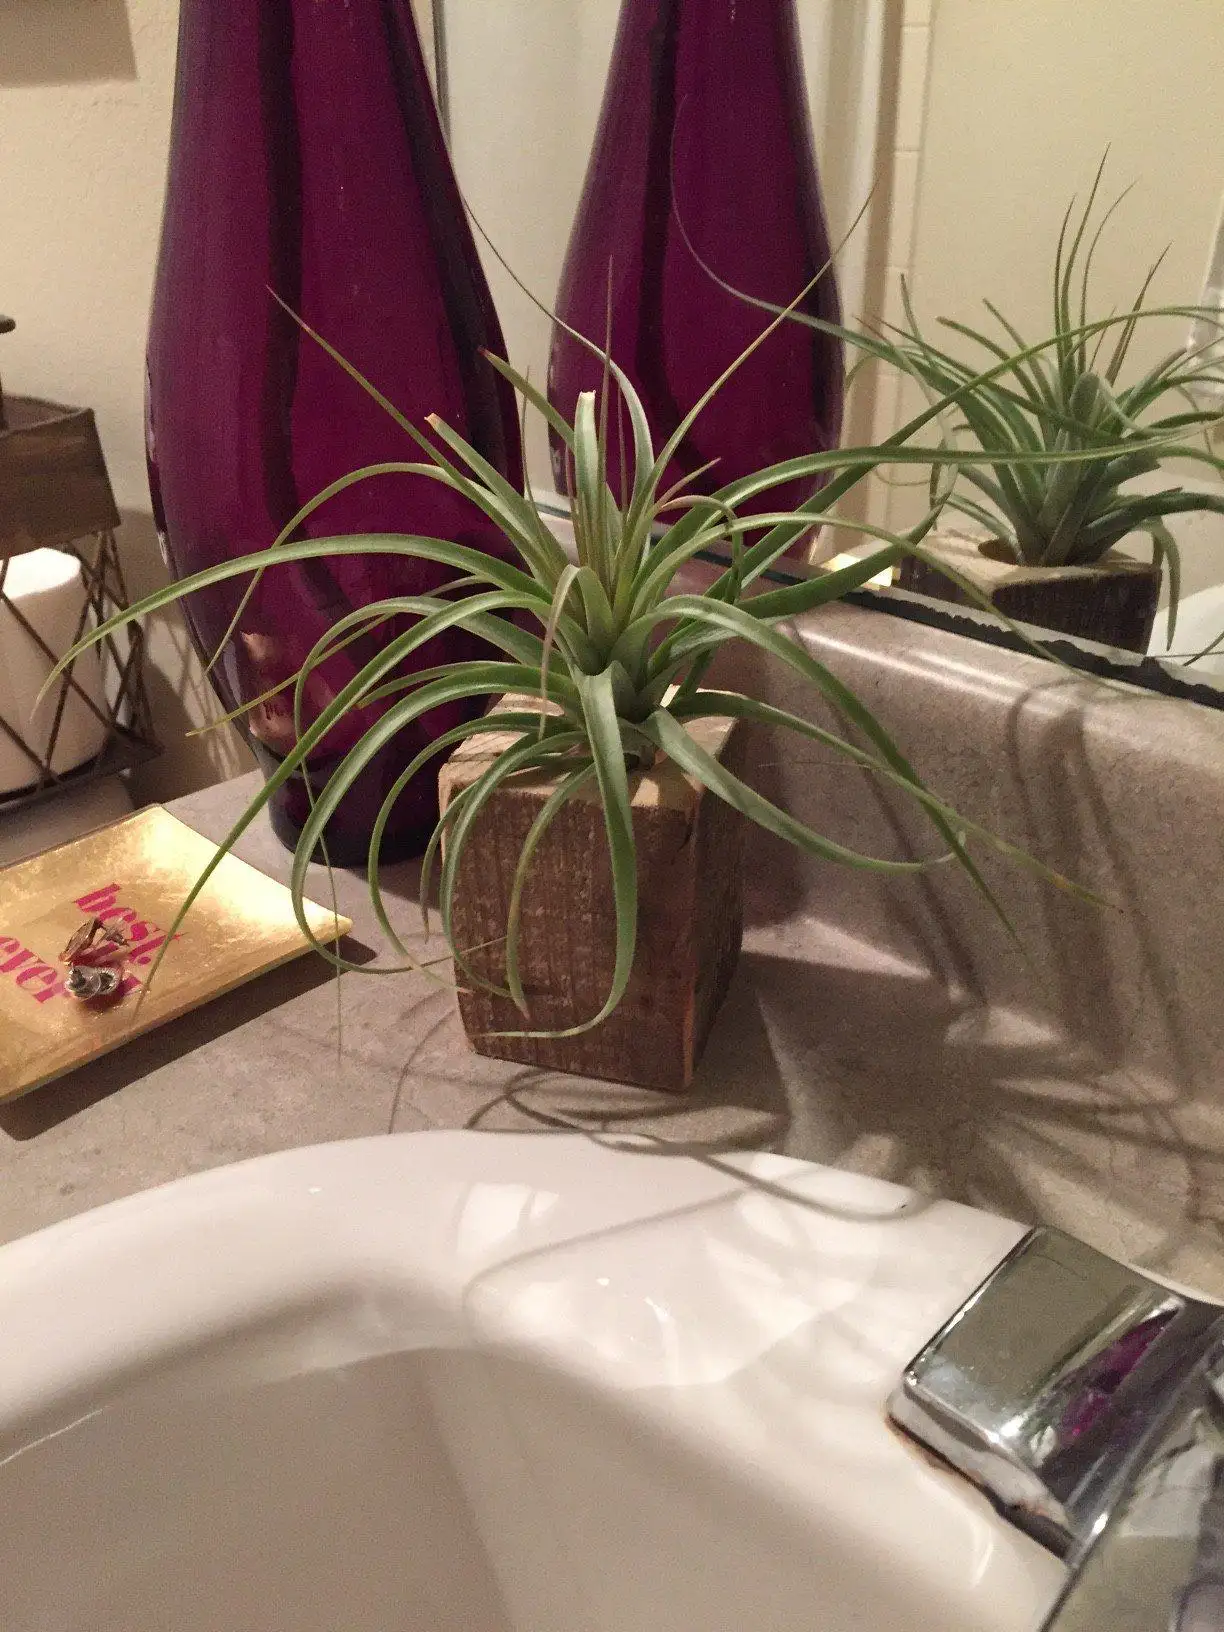 Bathroom plants